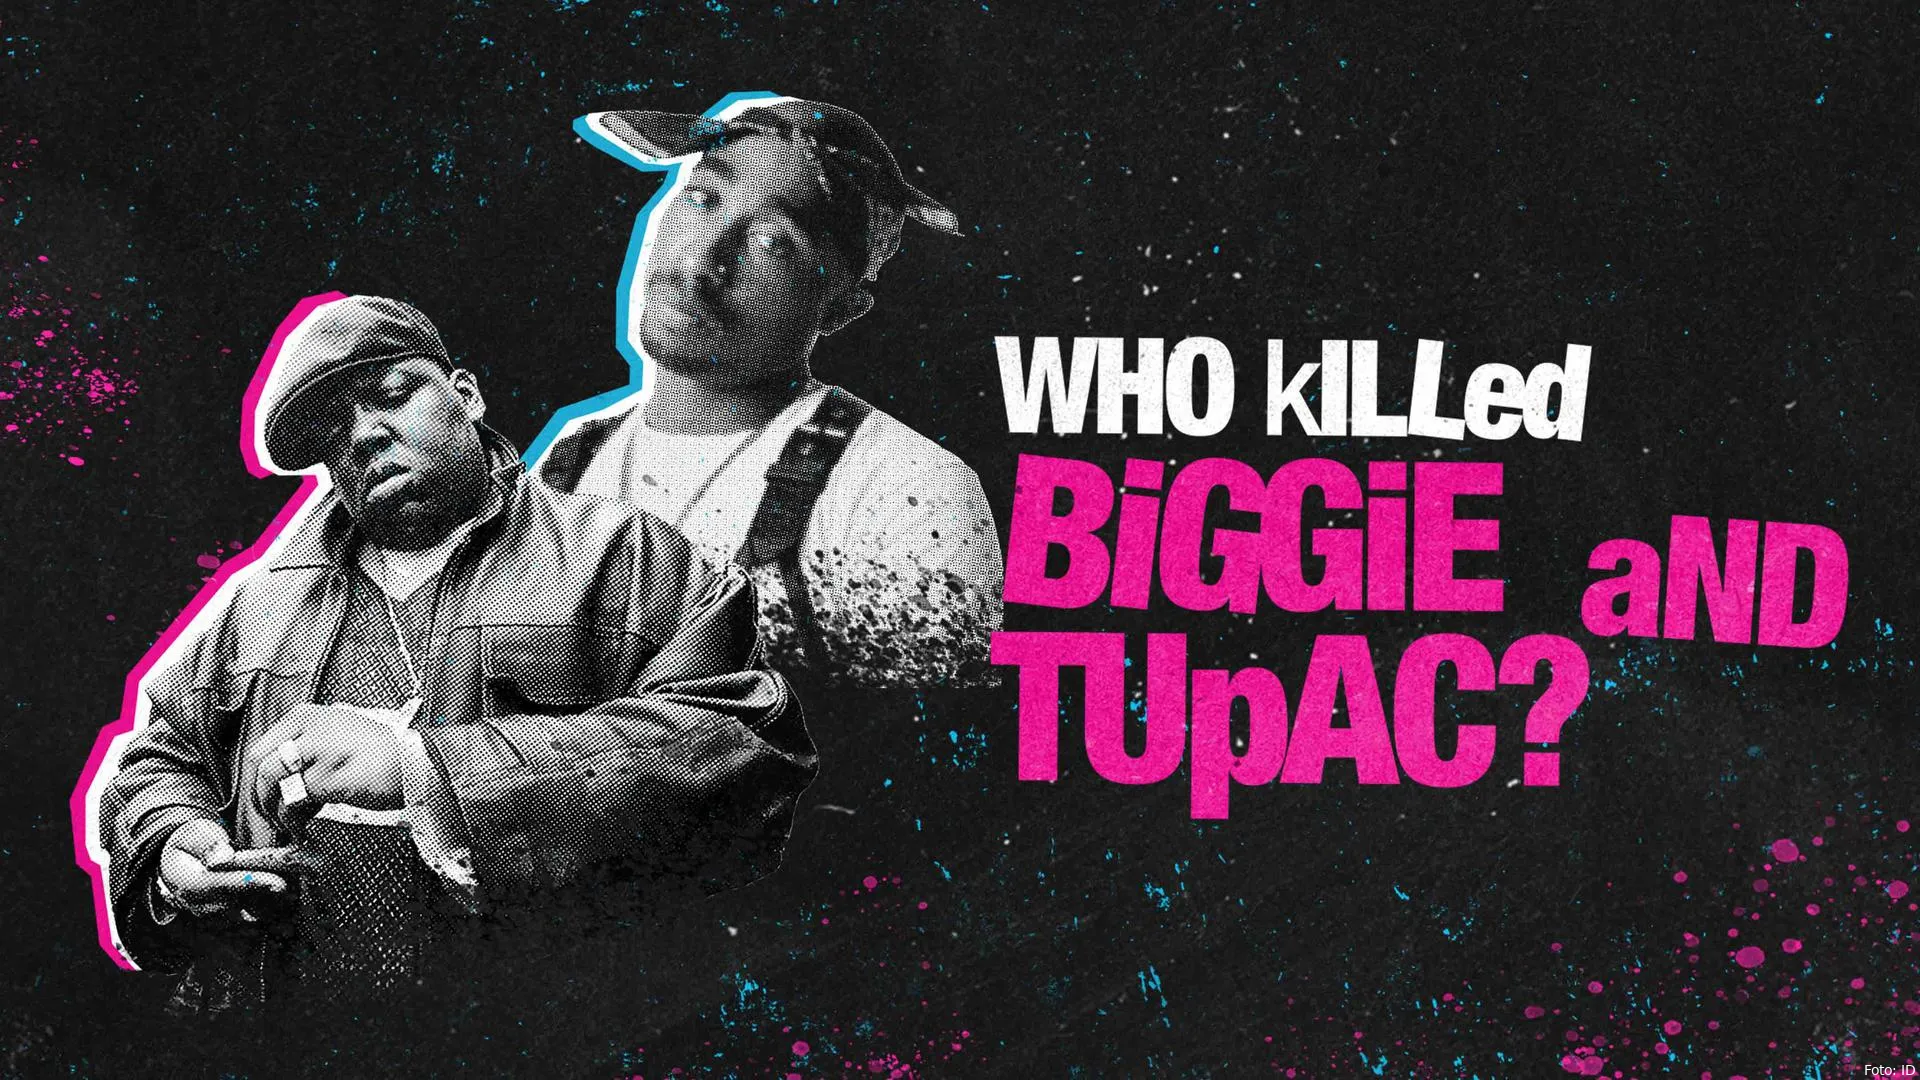 who killed biggie and tupac